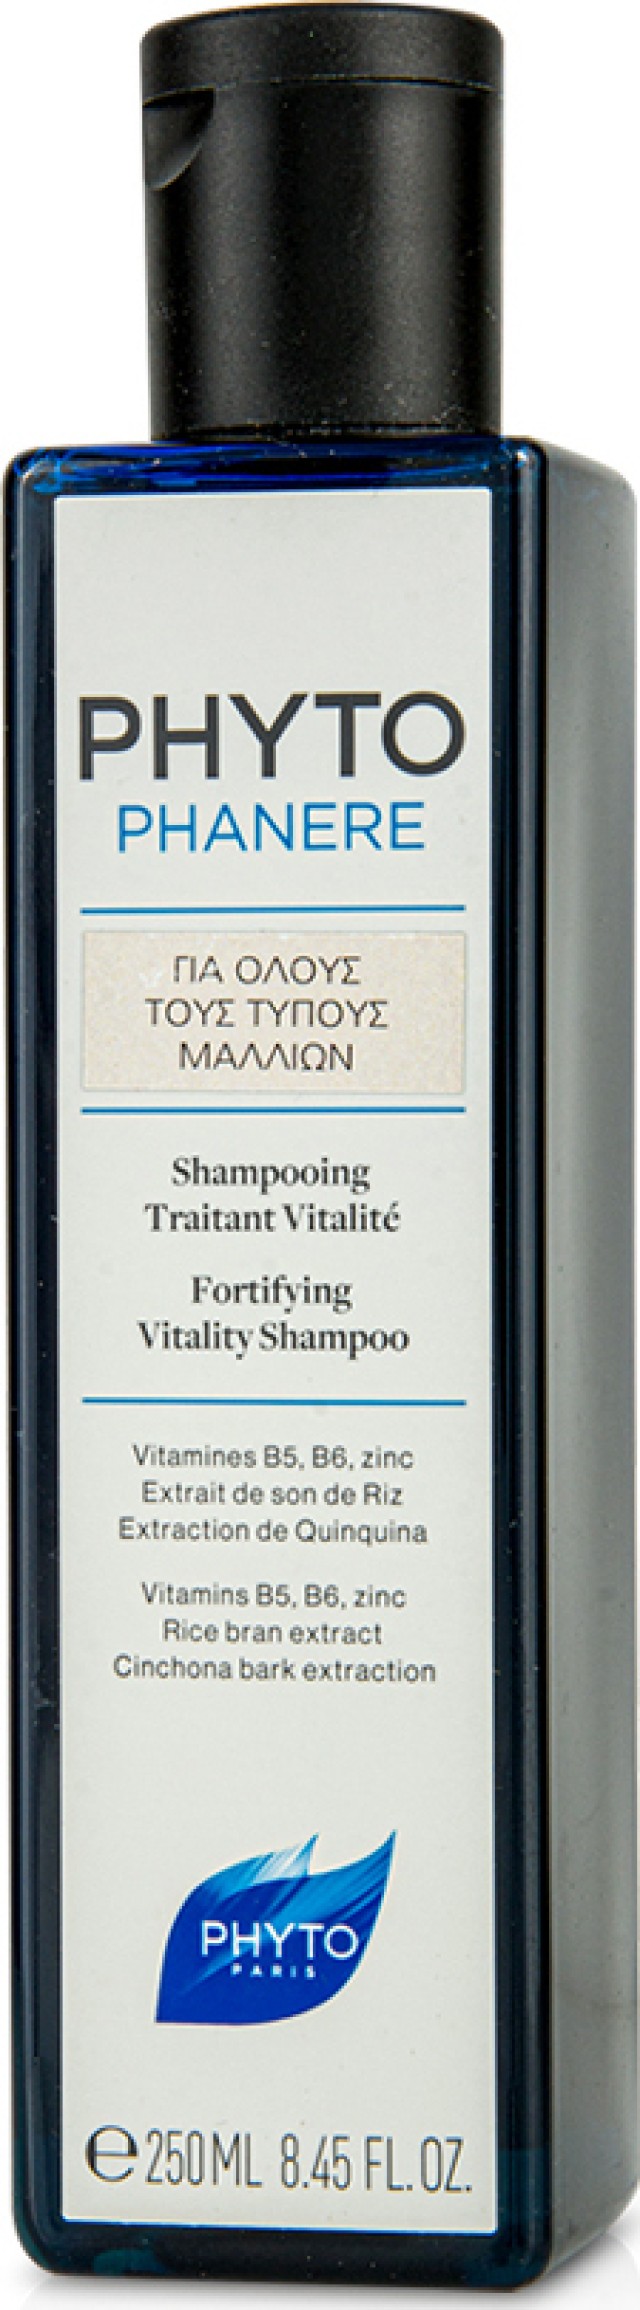 PHYTO Phanere Portifying VItality Shampoo, Δυναμωτικό Αναζωογονητικό Σαμπουάν για Όλους τους Τύπους Μαλλιών 250ml